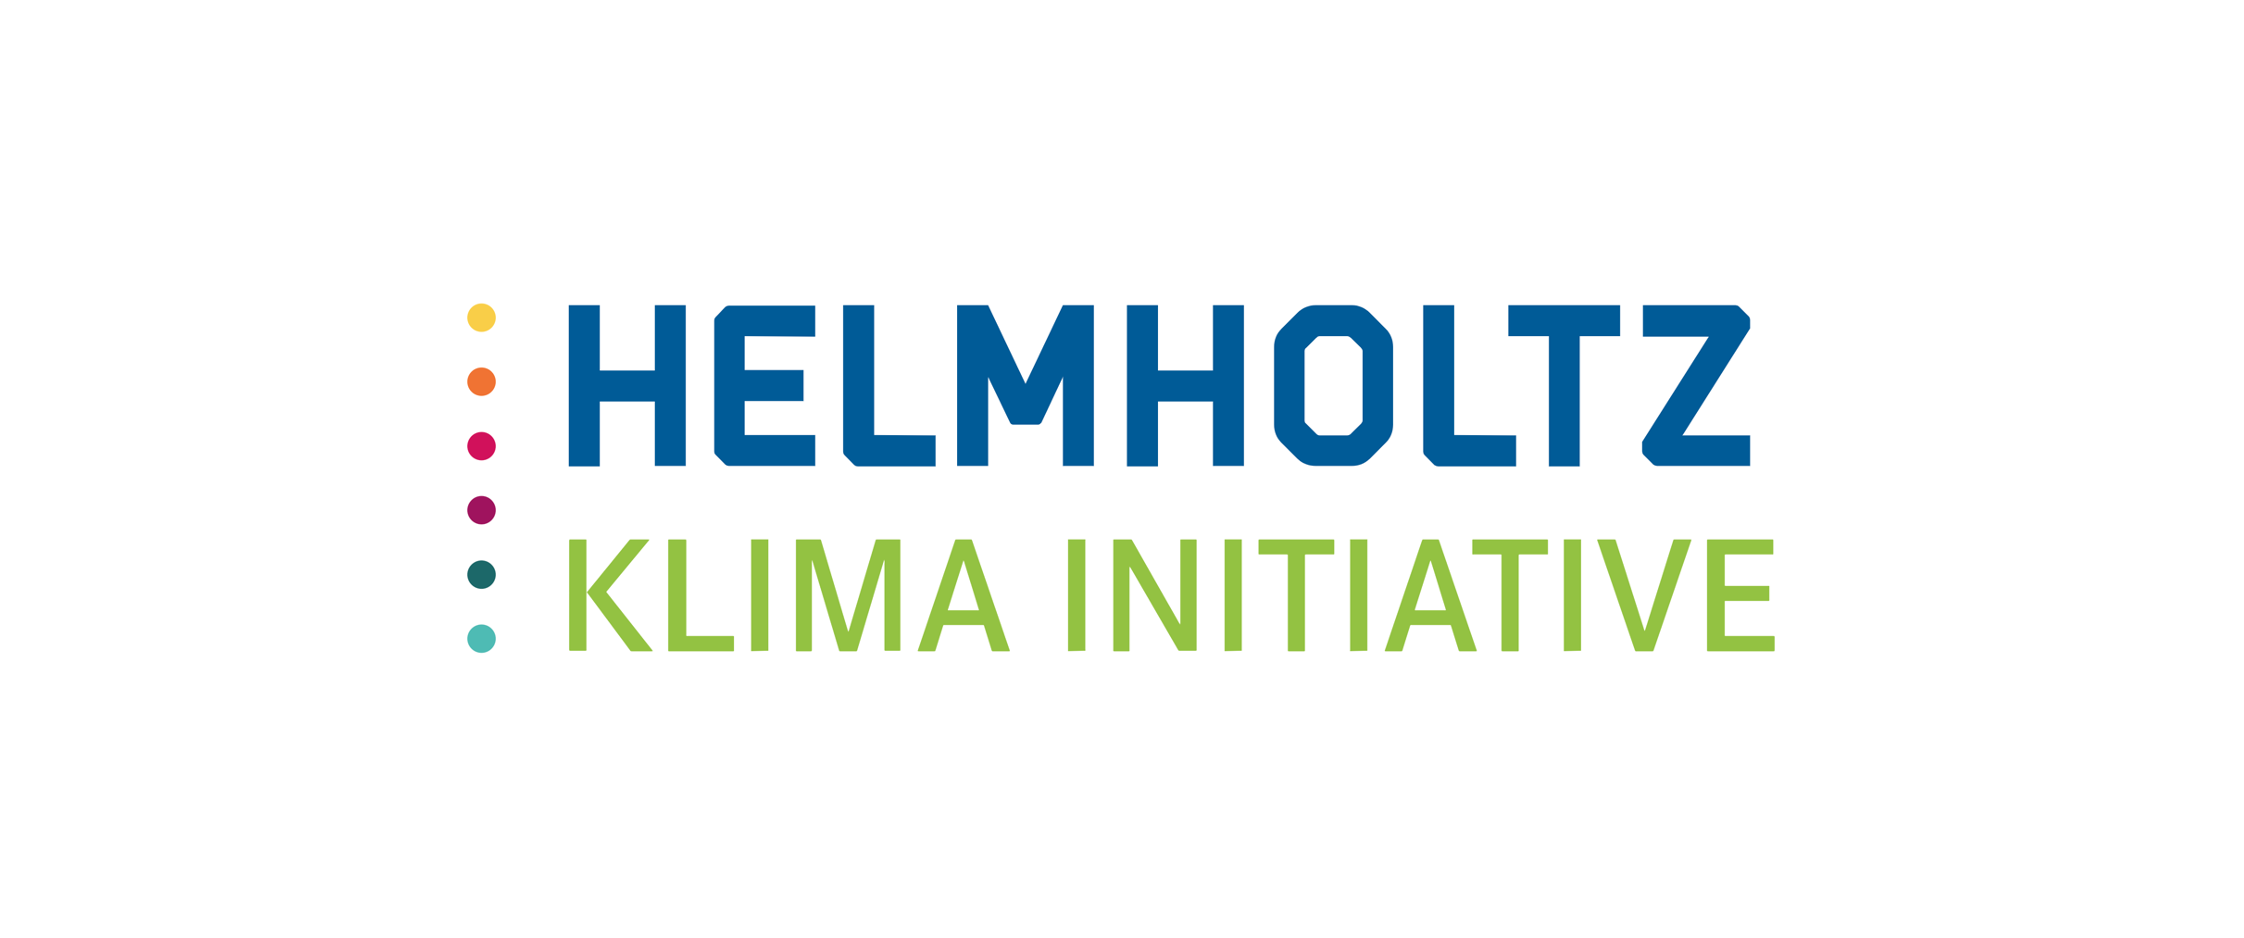 Helmholtz Initiative Logo